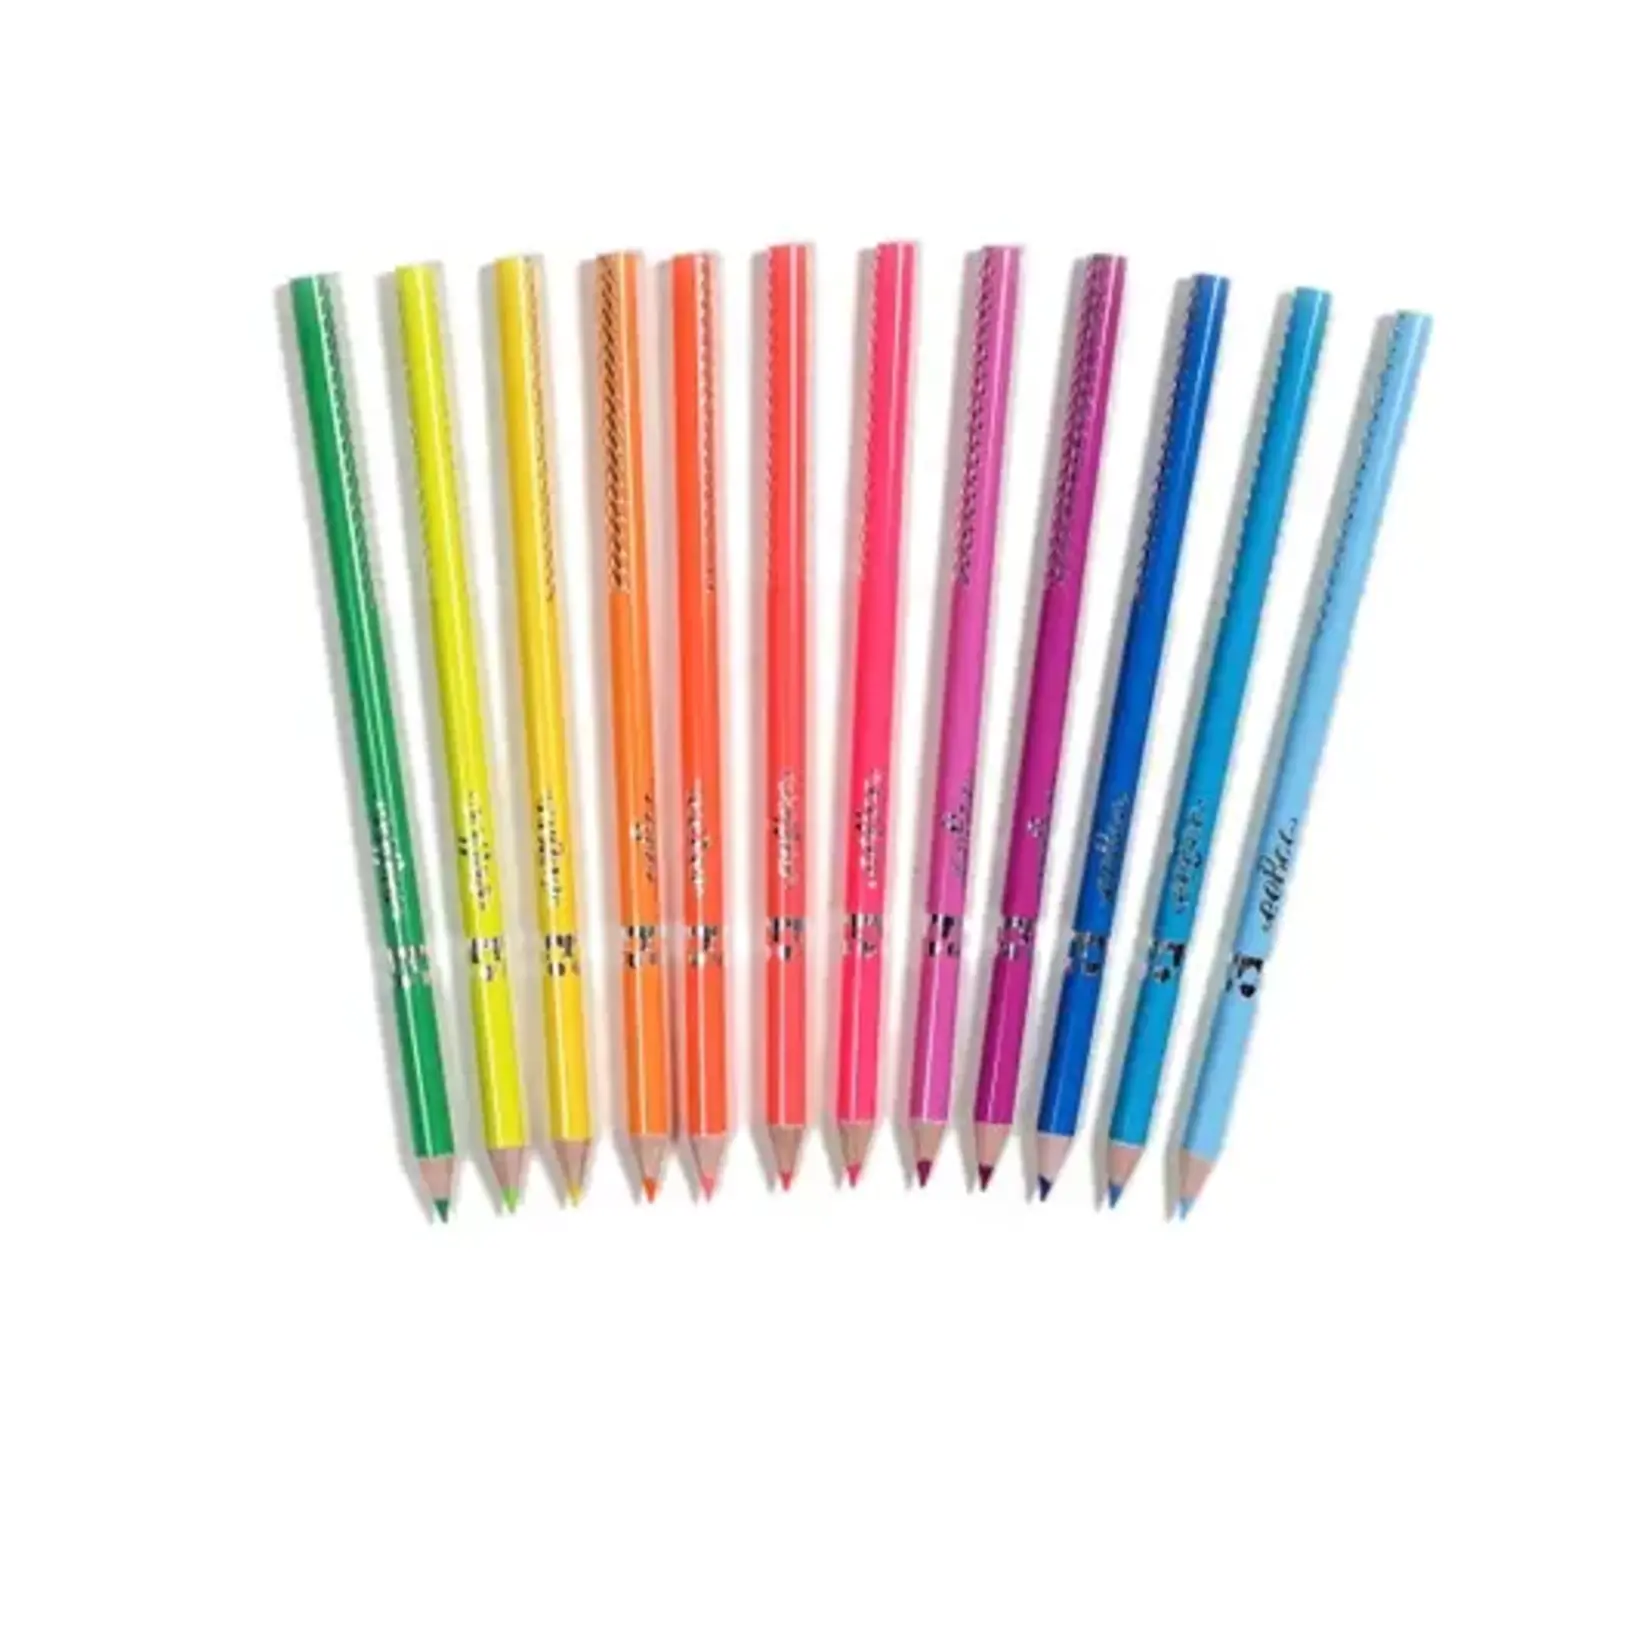 Hearts & Birds - 12 Fluorescent Color Pencils